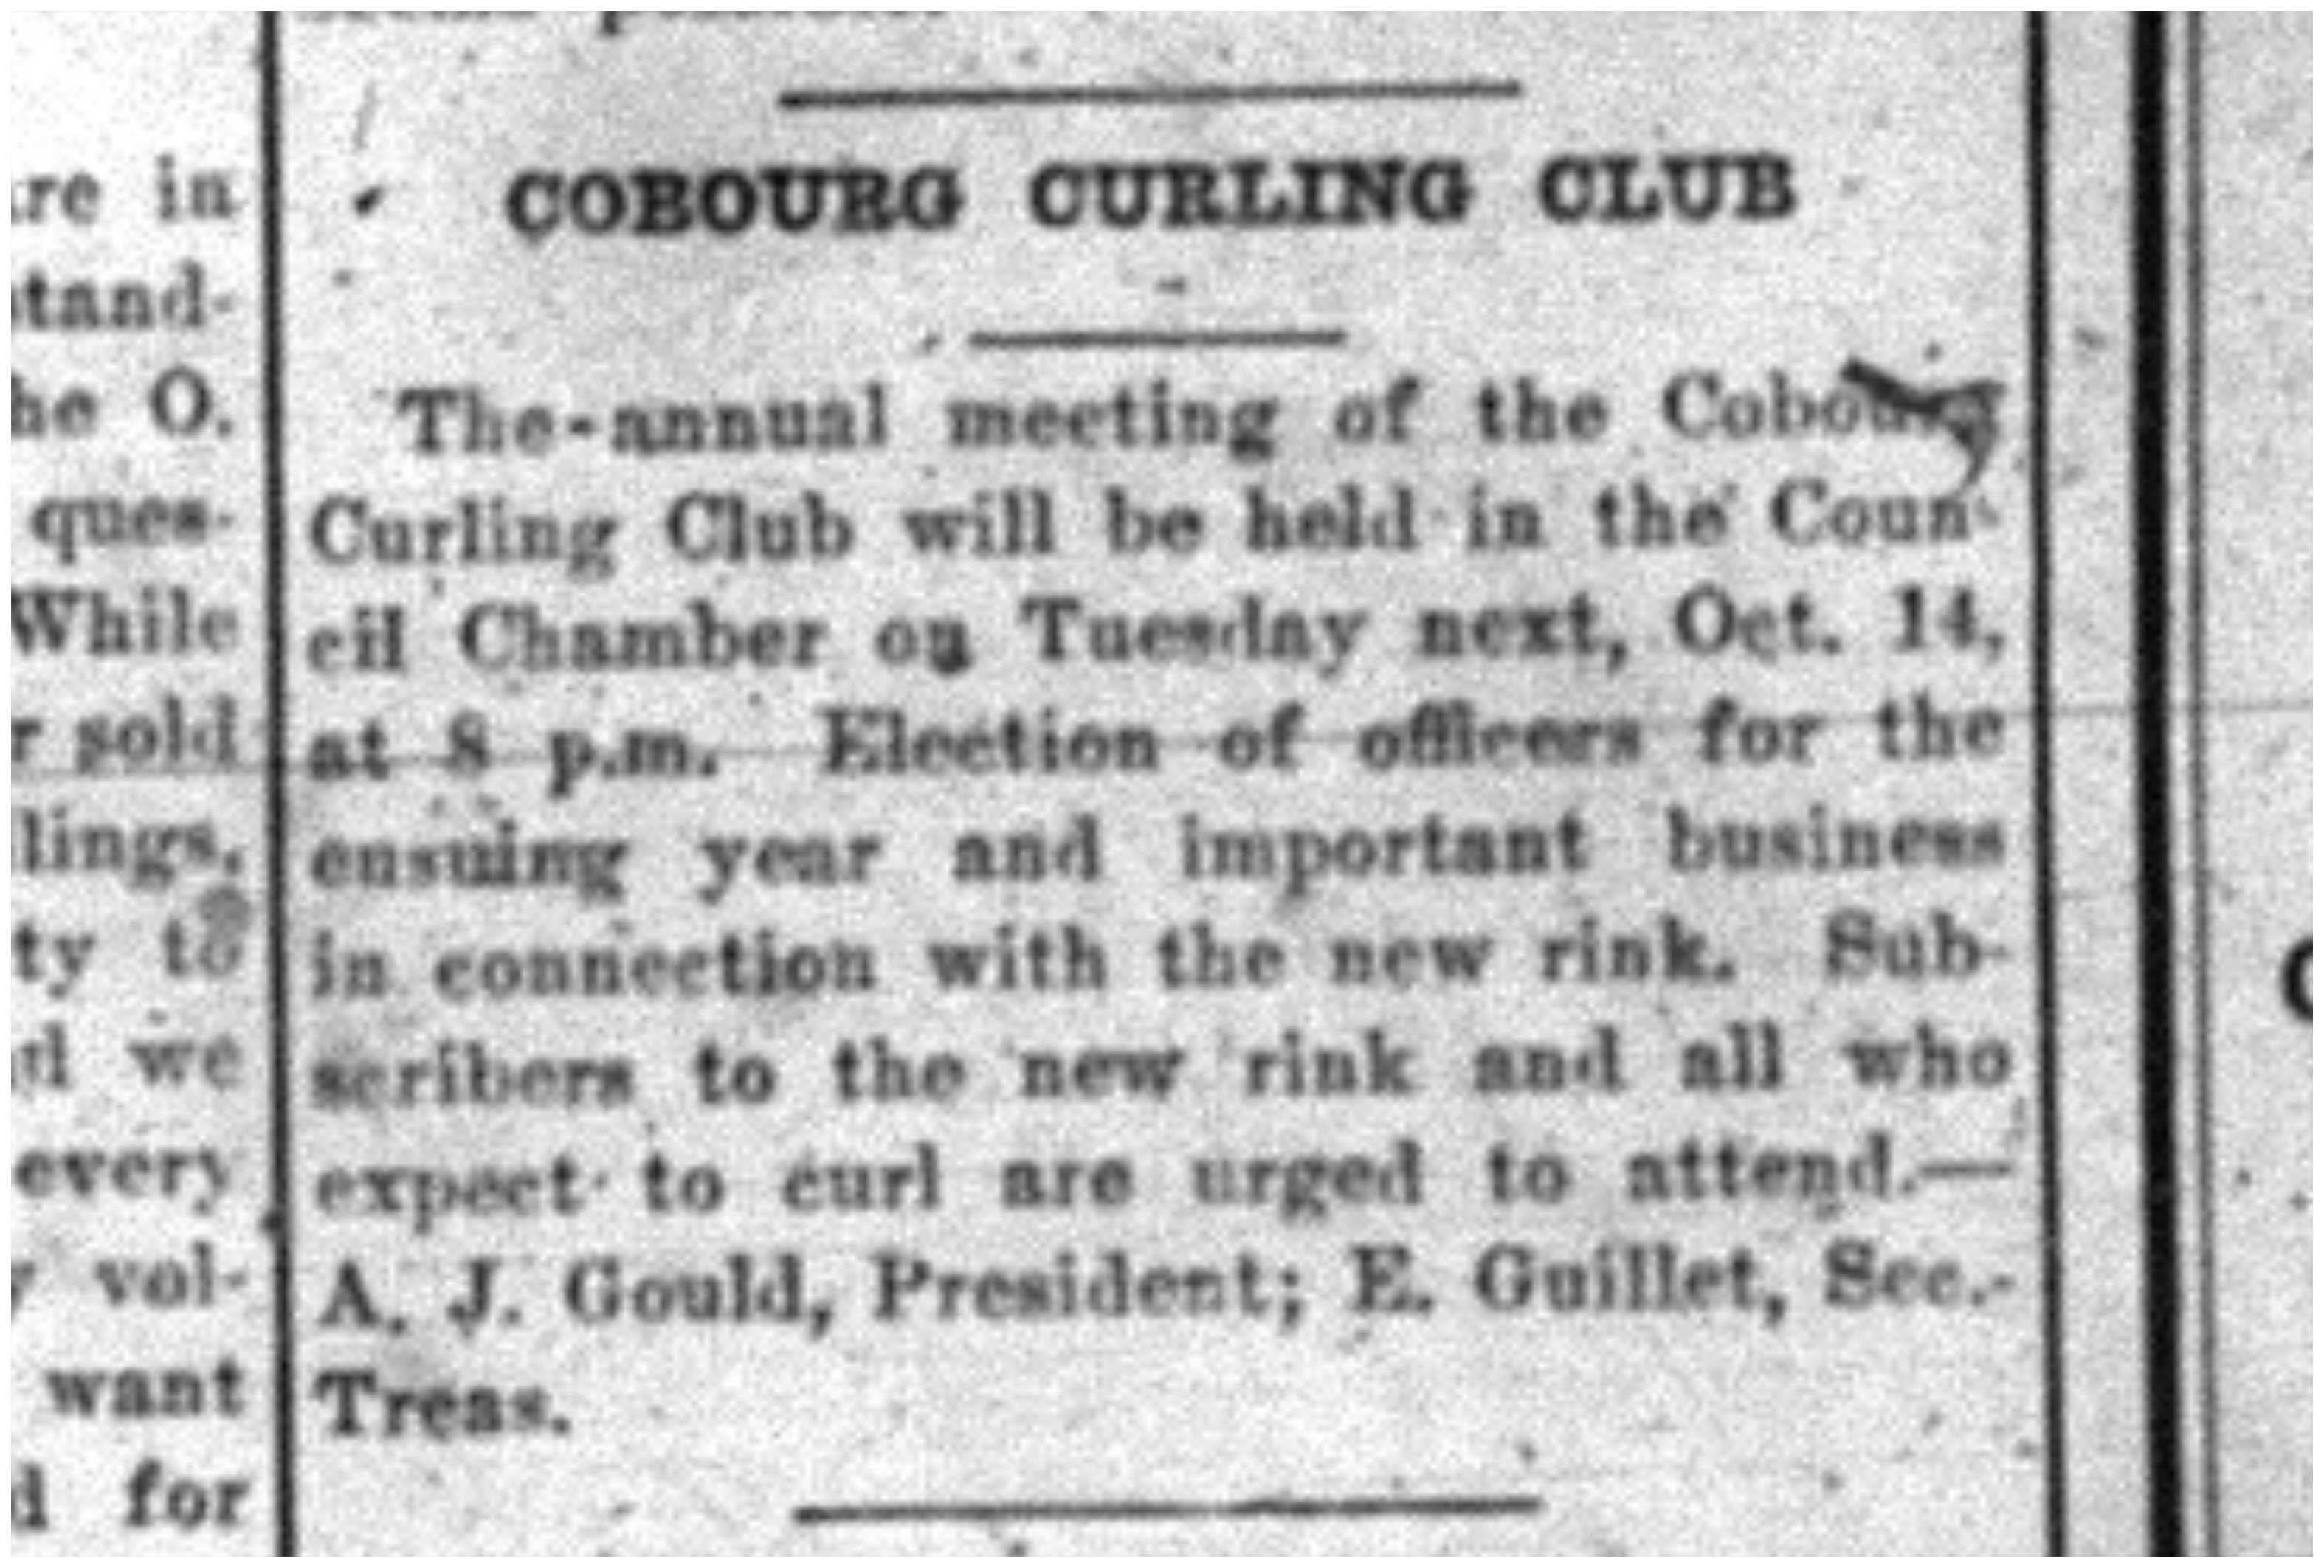 1919-10-10 Curling -Annual meeting